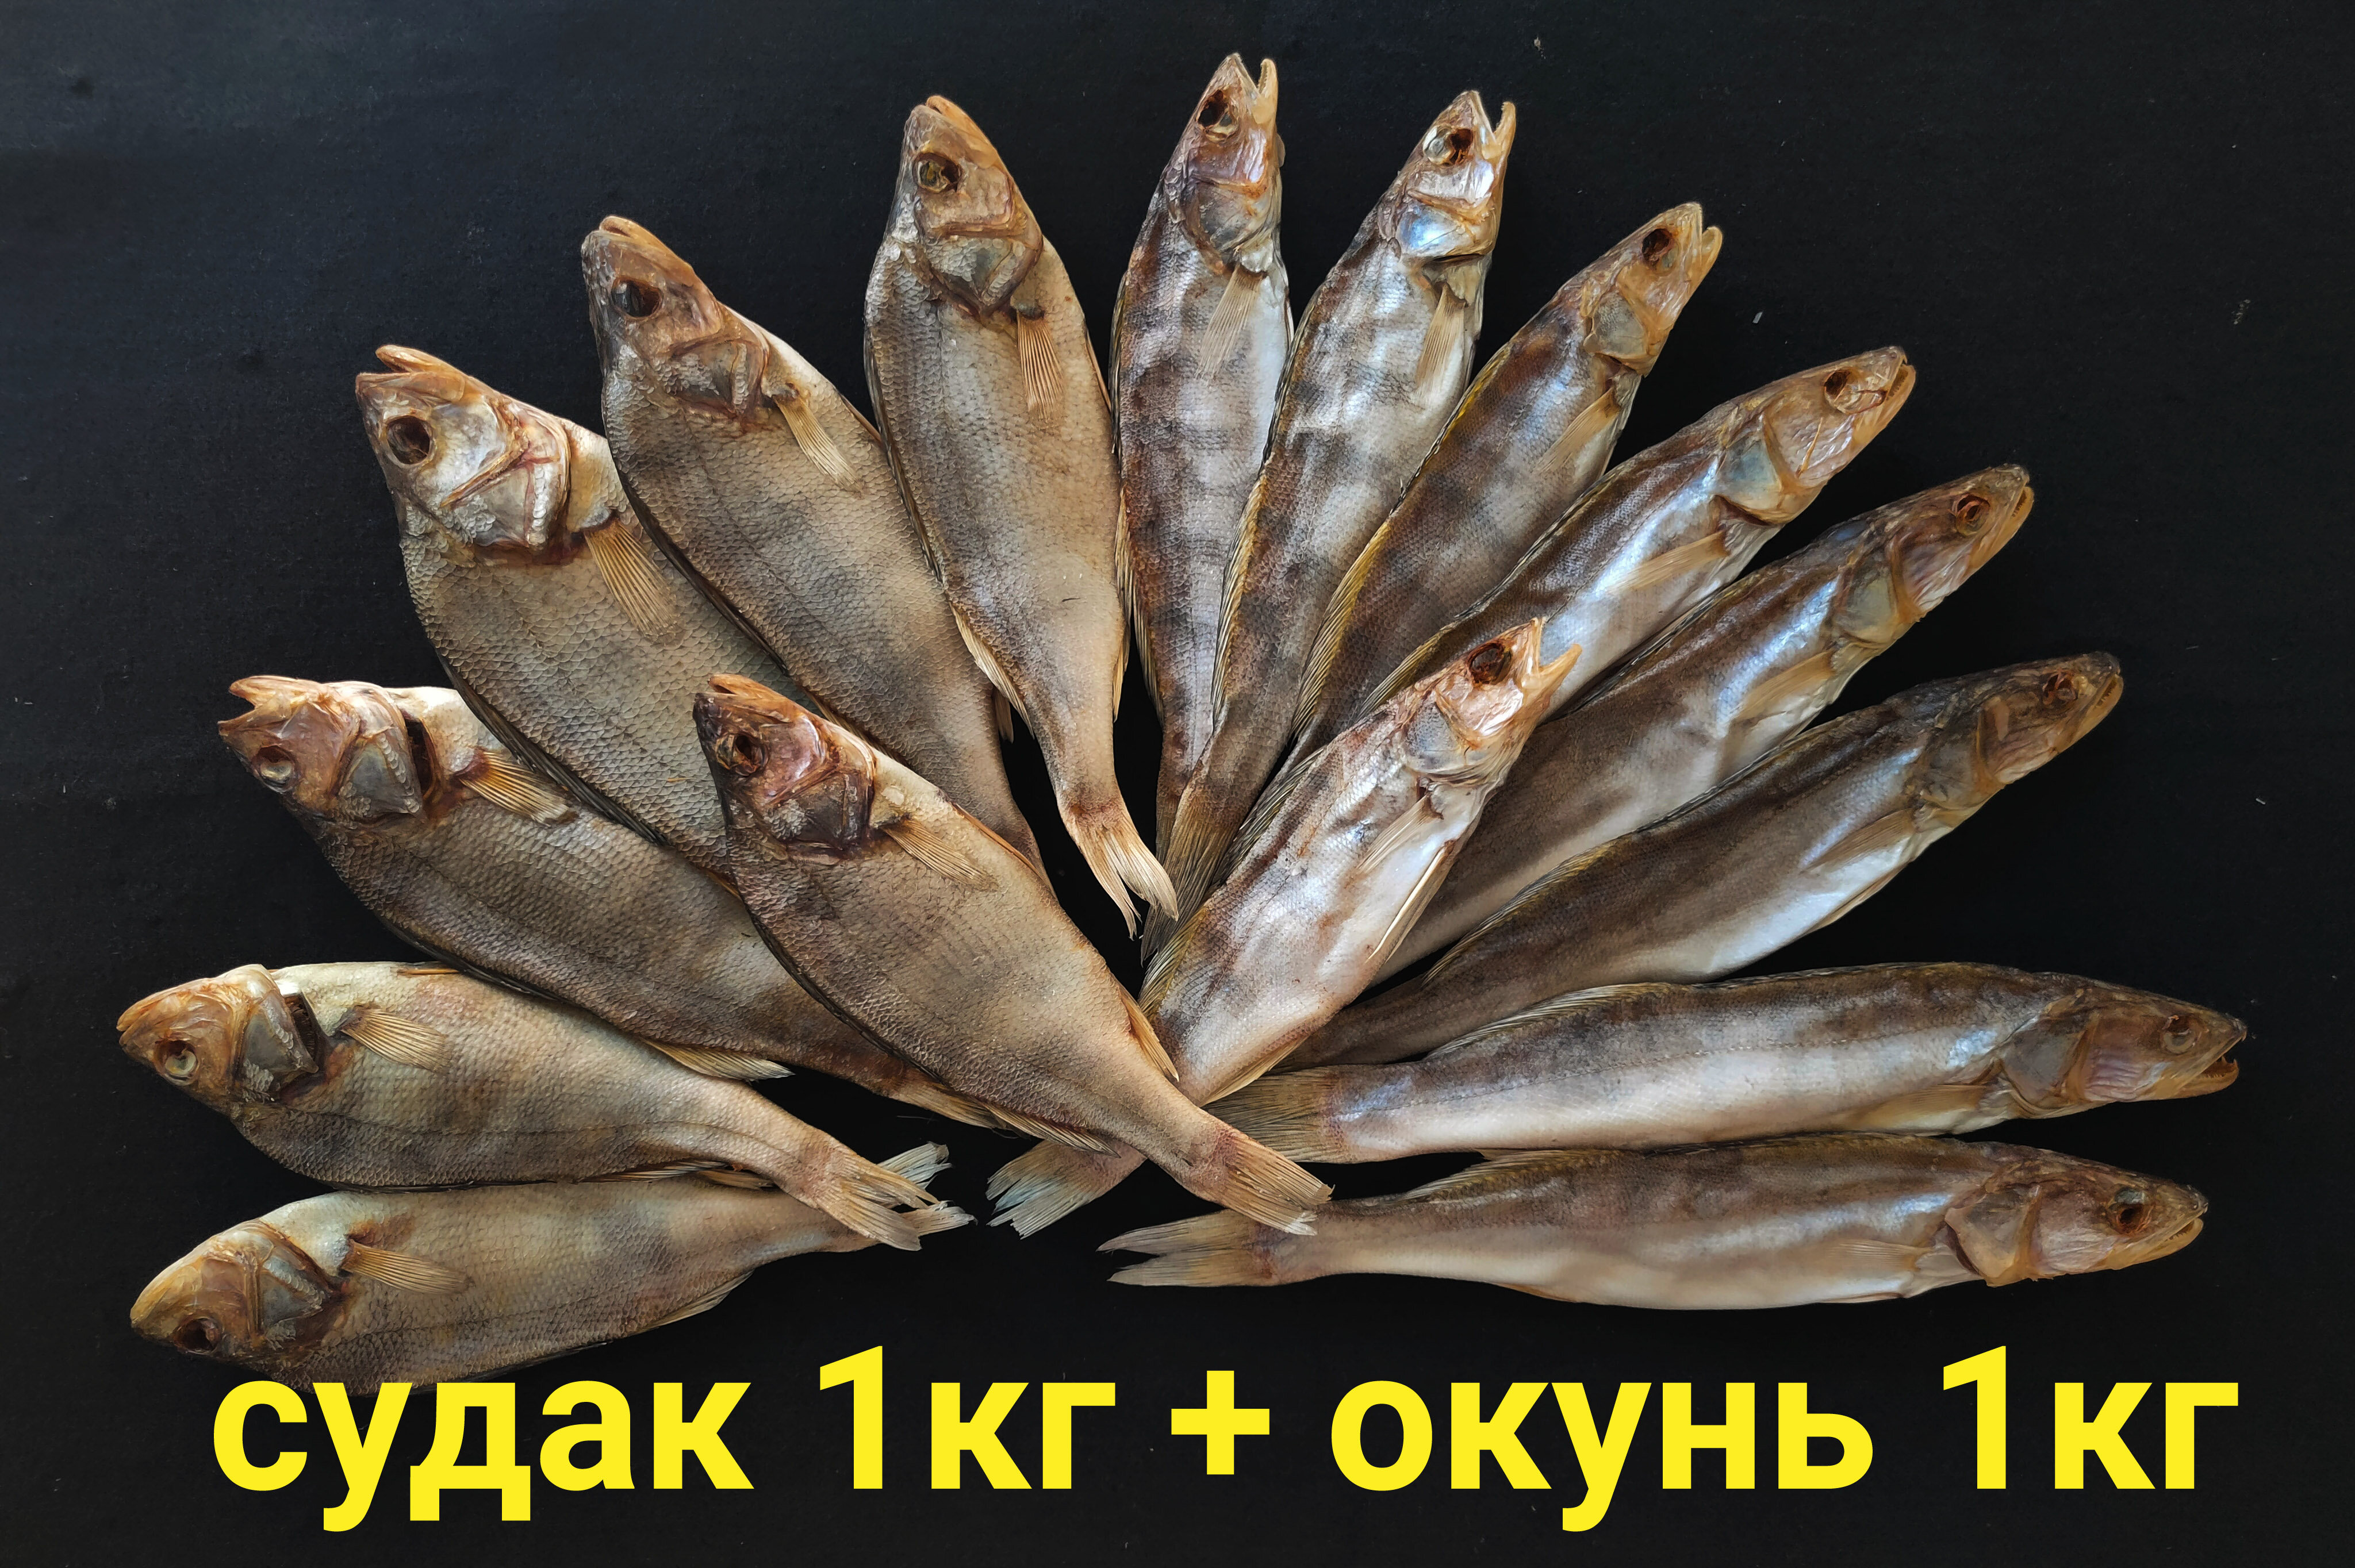 Рыбный набор Хищник 2кг (Судак 1кг+Окунь 1кг), Астраханская вяленая рыба